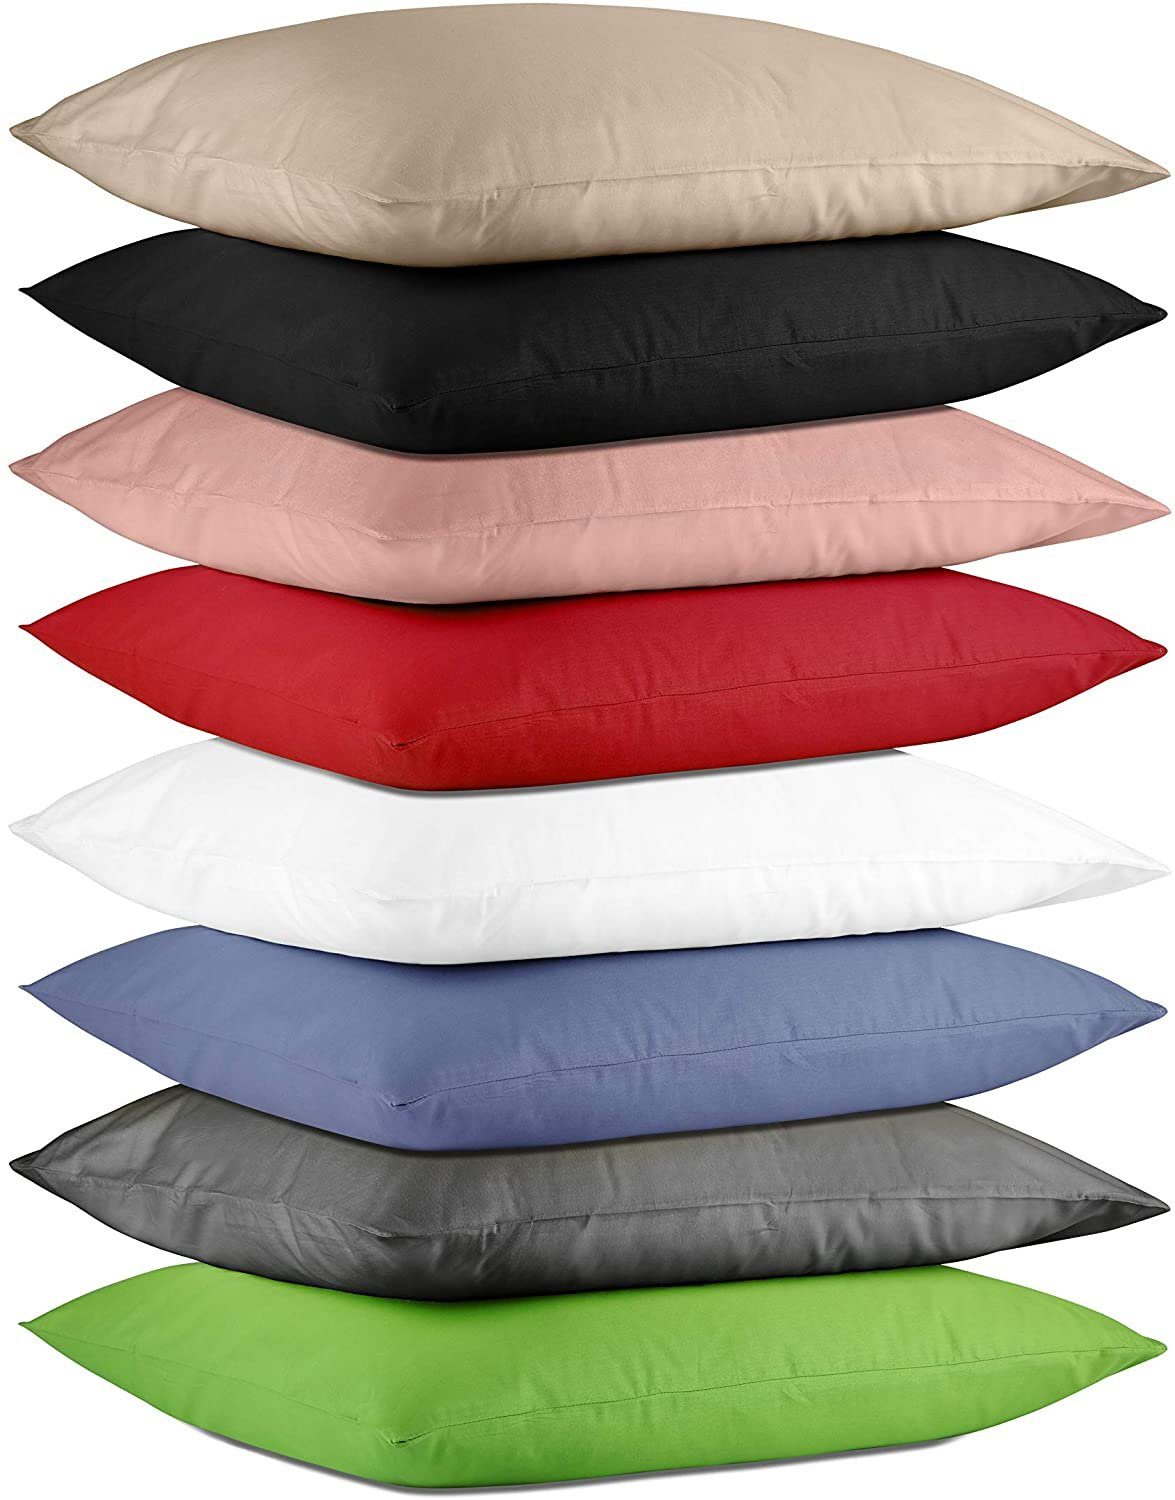 Kissenbezug 2er Set Kissenhülle Baumwolle Exklusive, Doppelpack Kissenbezüge ca. 115 g/m², Hometex Premium Textiles (2 Stück), mit verdecktem Reißverschluss Rot